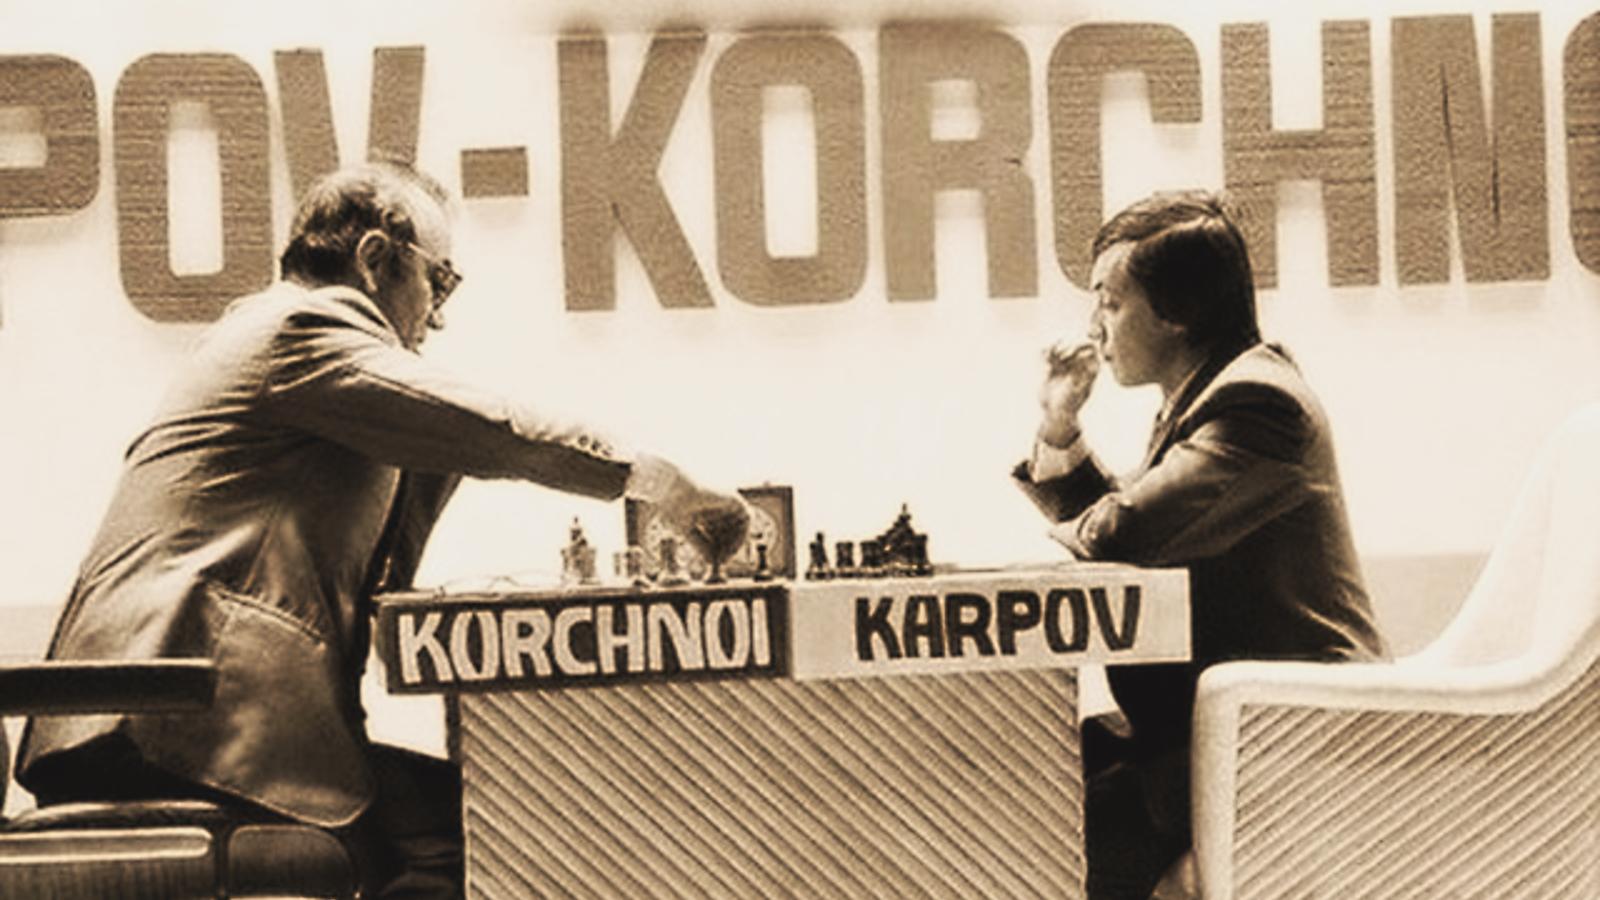 Keene, Karpov vs Korchnoi 1978 : Fadaga : Free Download, Borrow, and  Streaming : Internet Archive